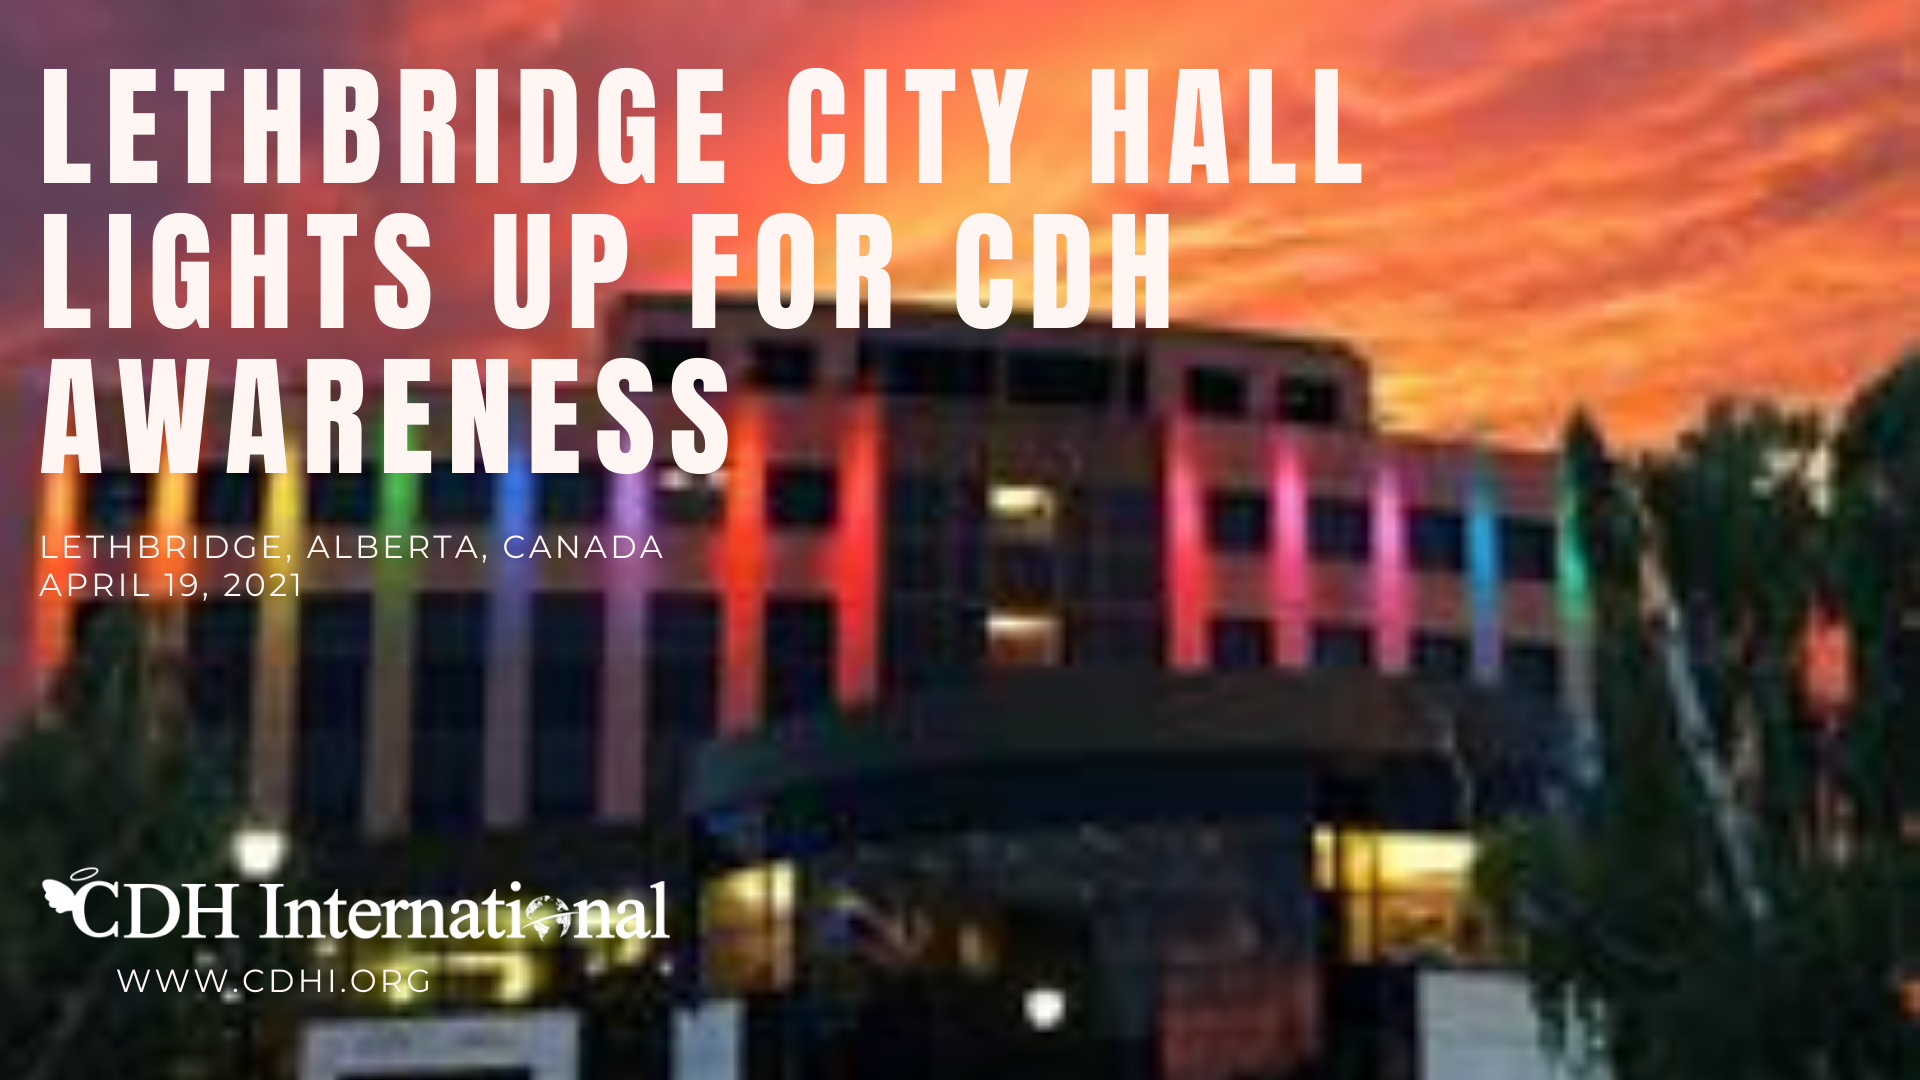 The High Level Bridge Lights Up for CDH Awareness